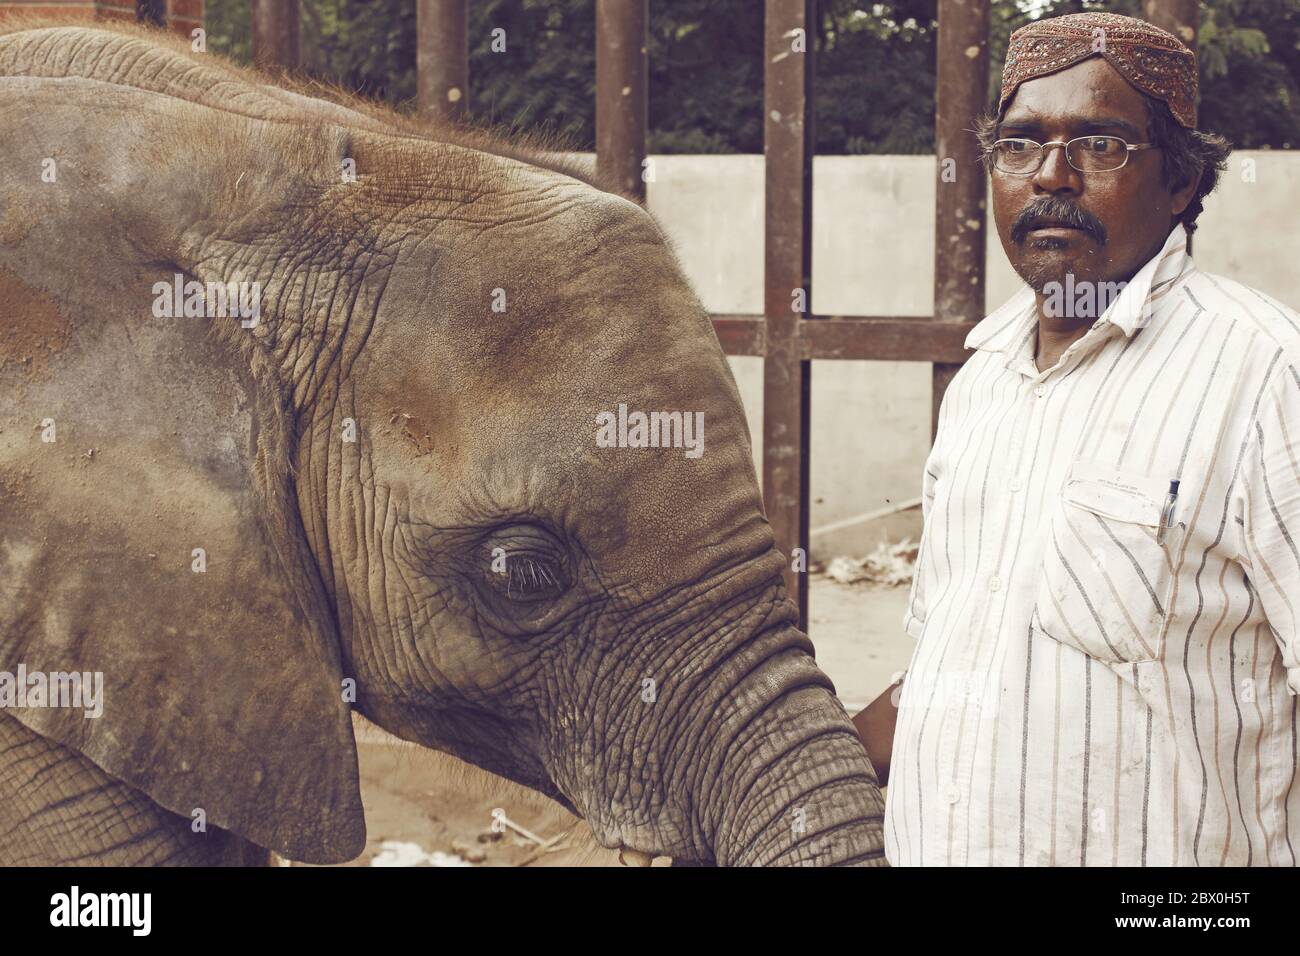 Baby elephant at Karachi Zoo with caretaker, Karachi, Pakistan 26-06-2012 Stock Photo